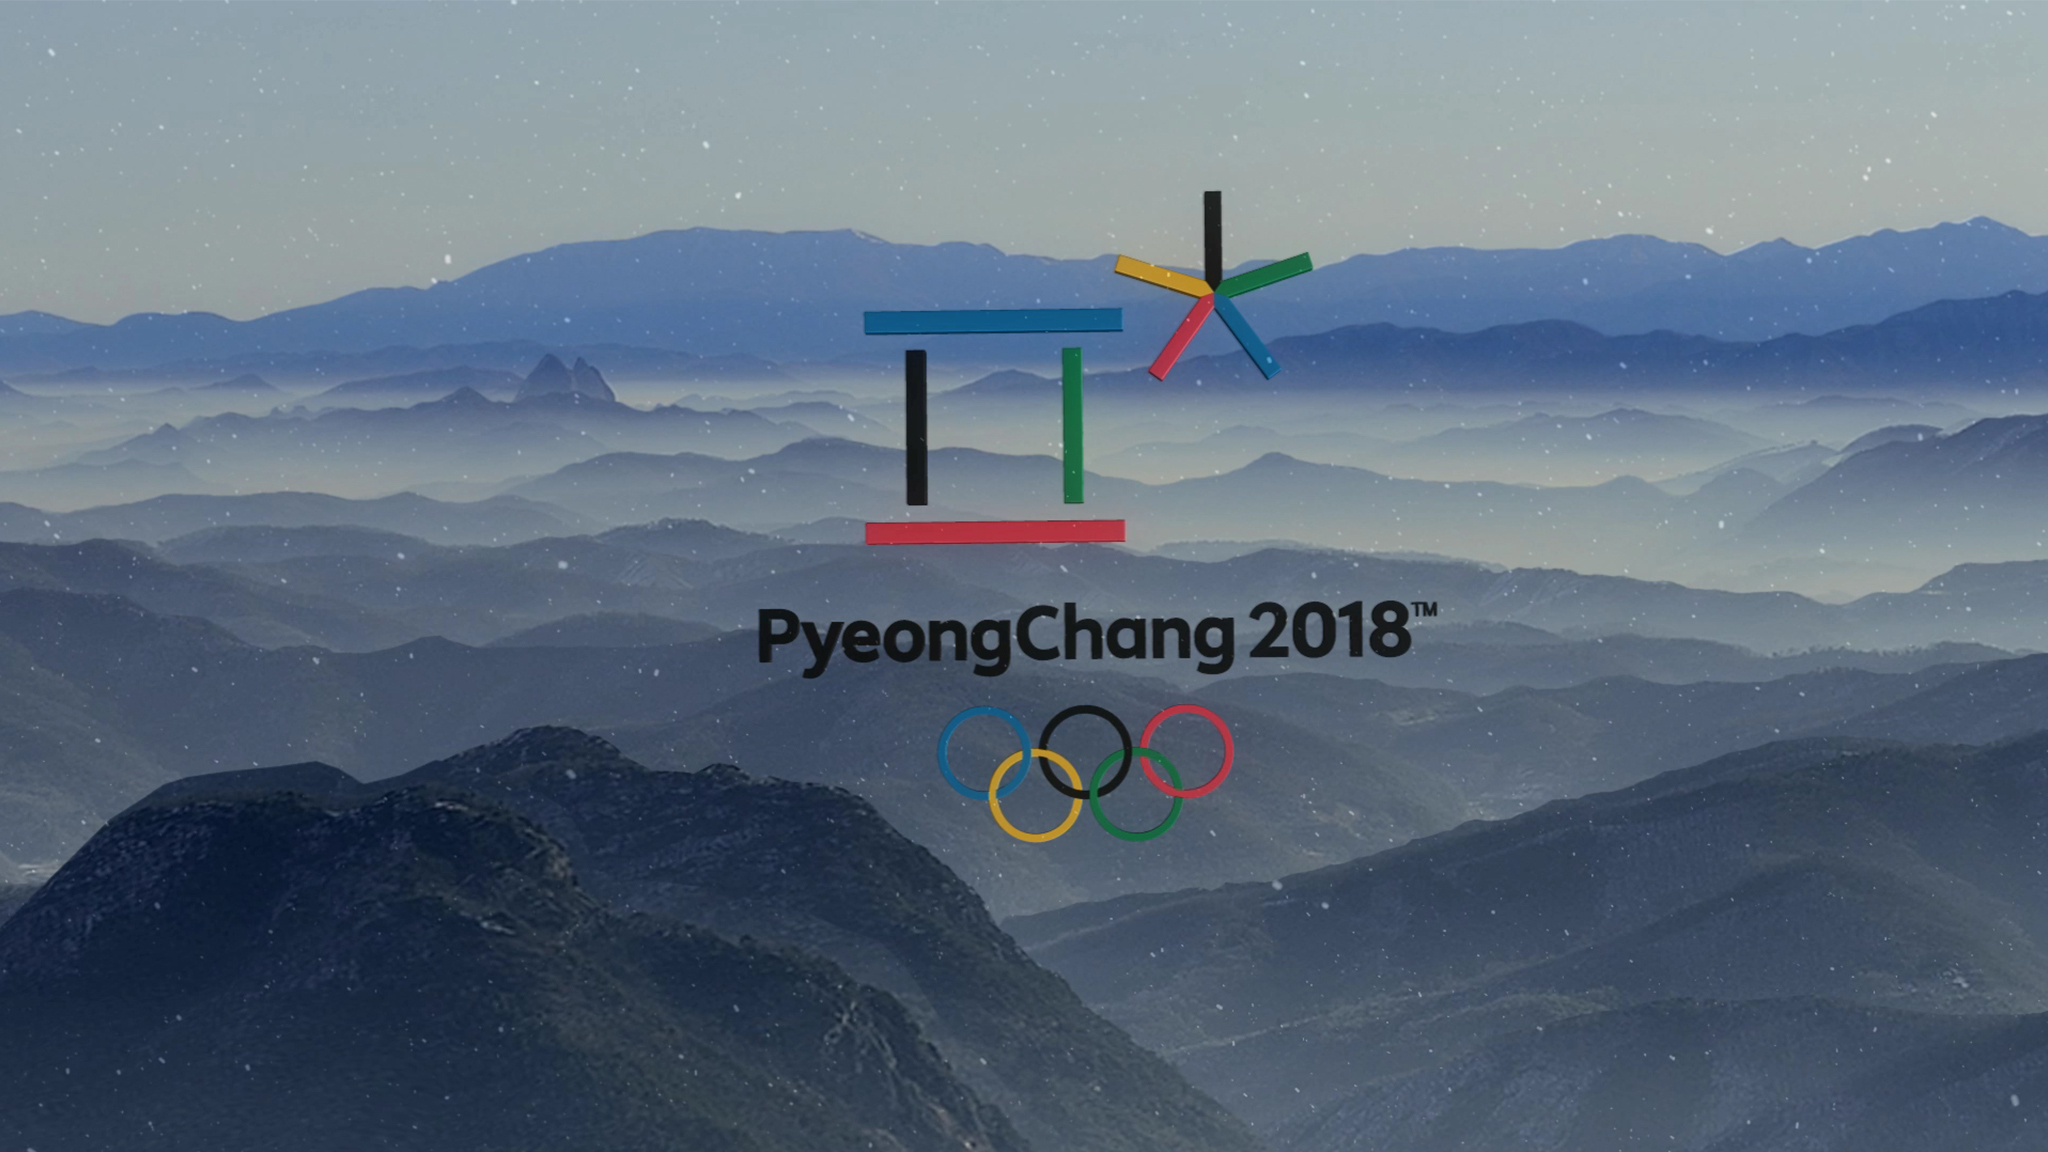 Pyeongchang2018 Olympic Slogan Launching Film Aniframe